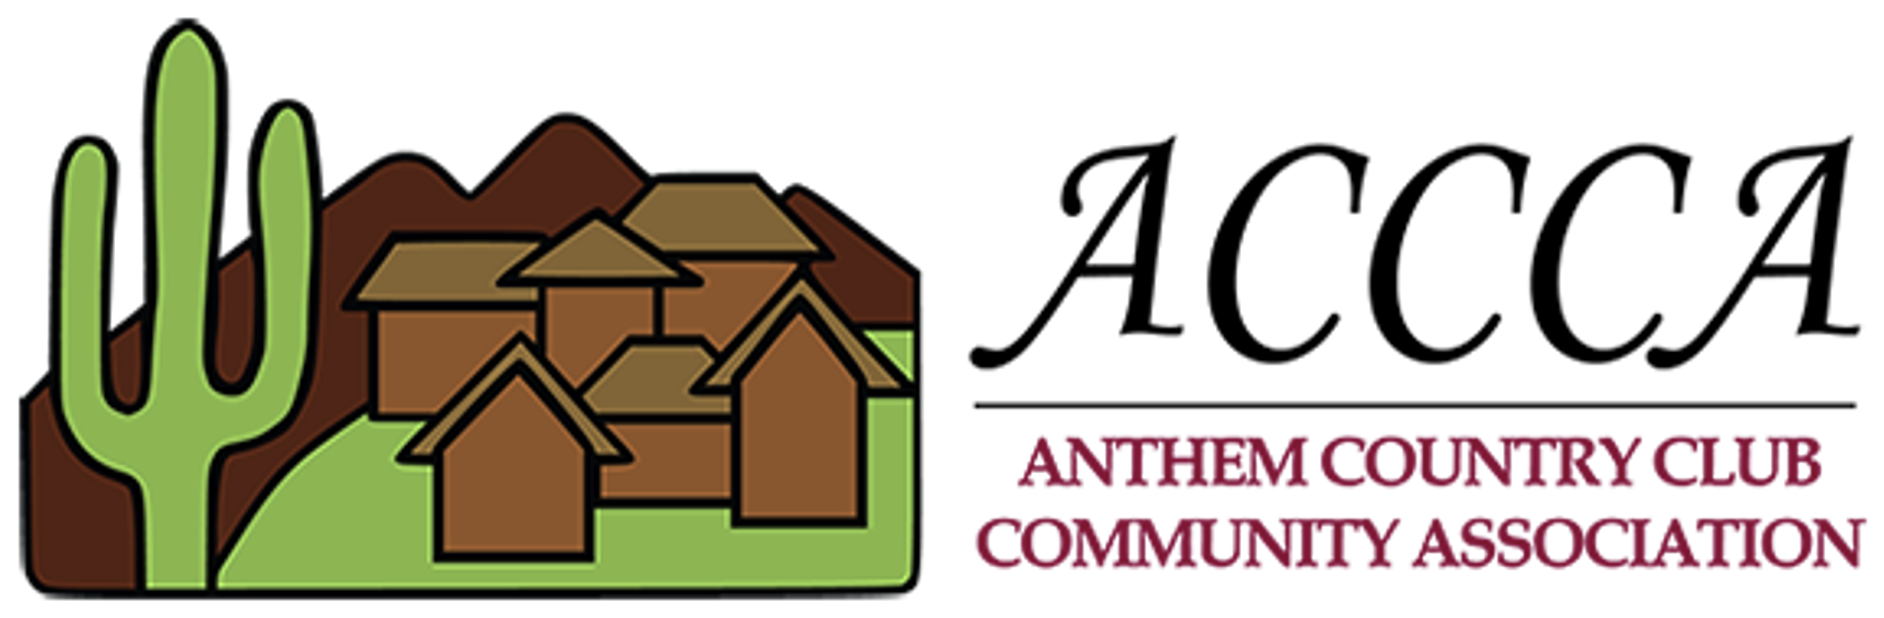 Anthem country club community logo.